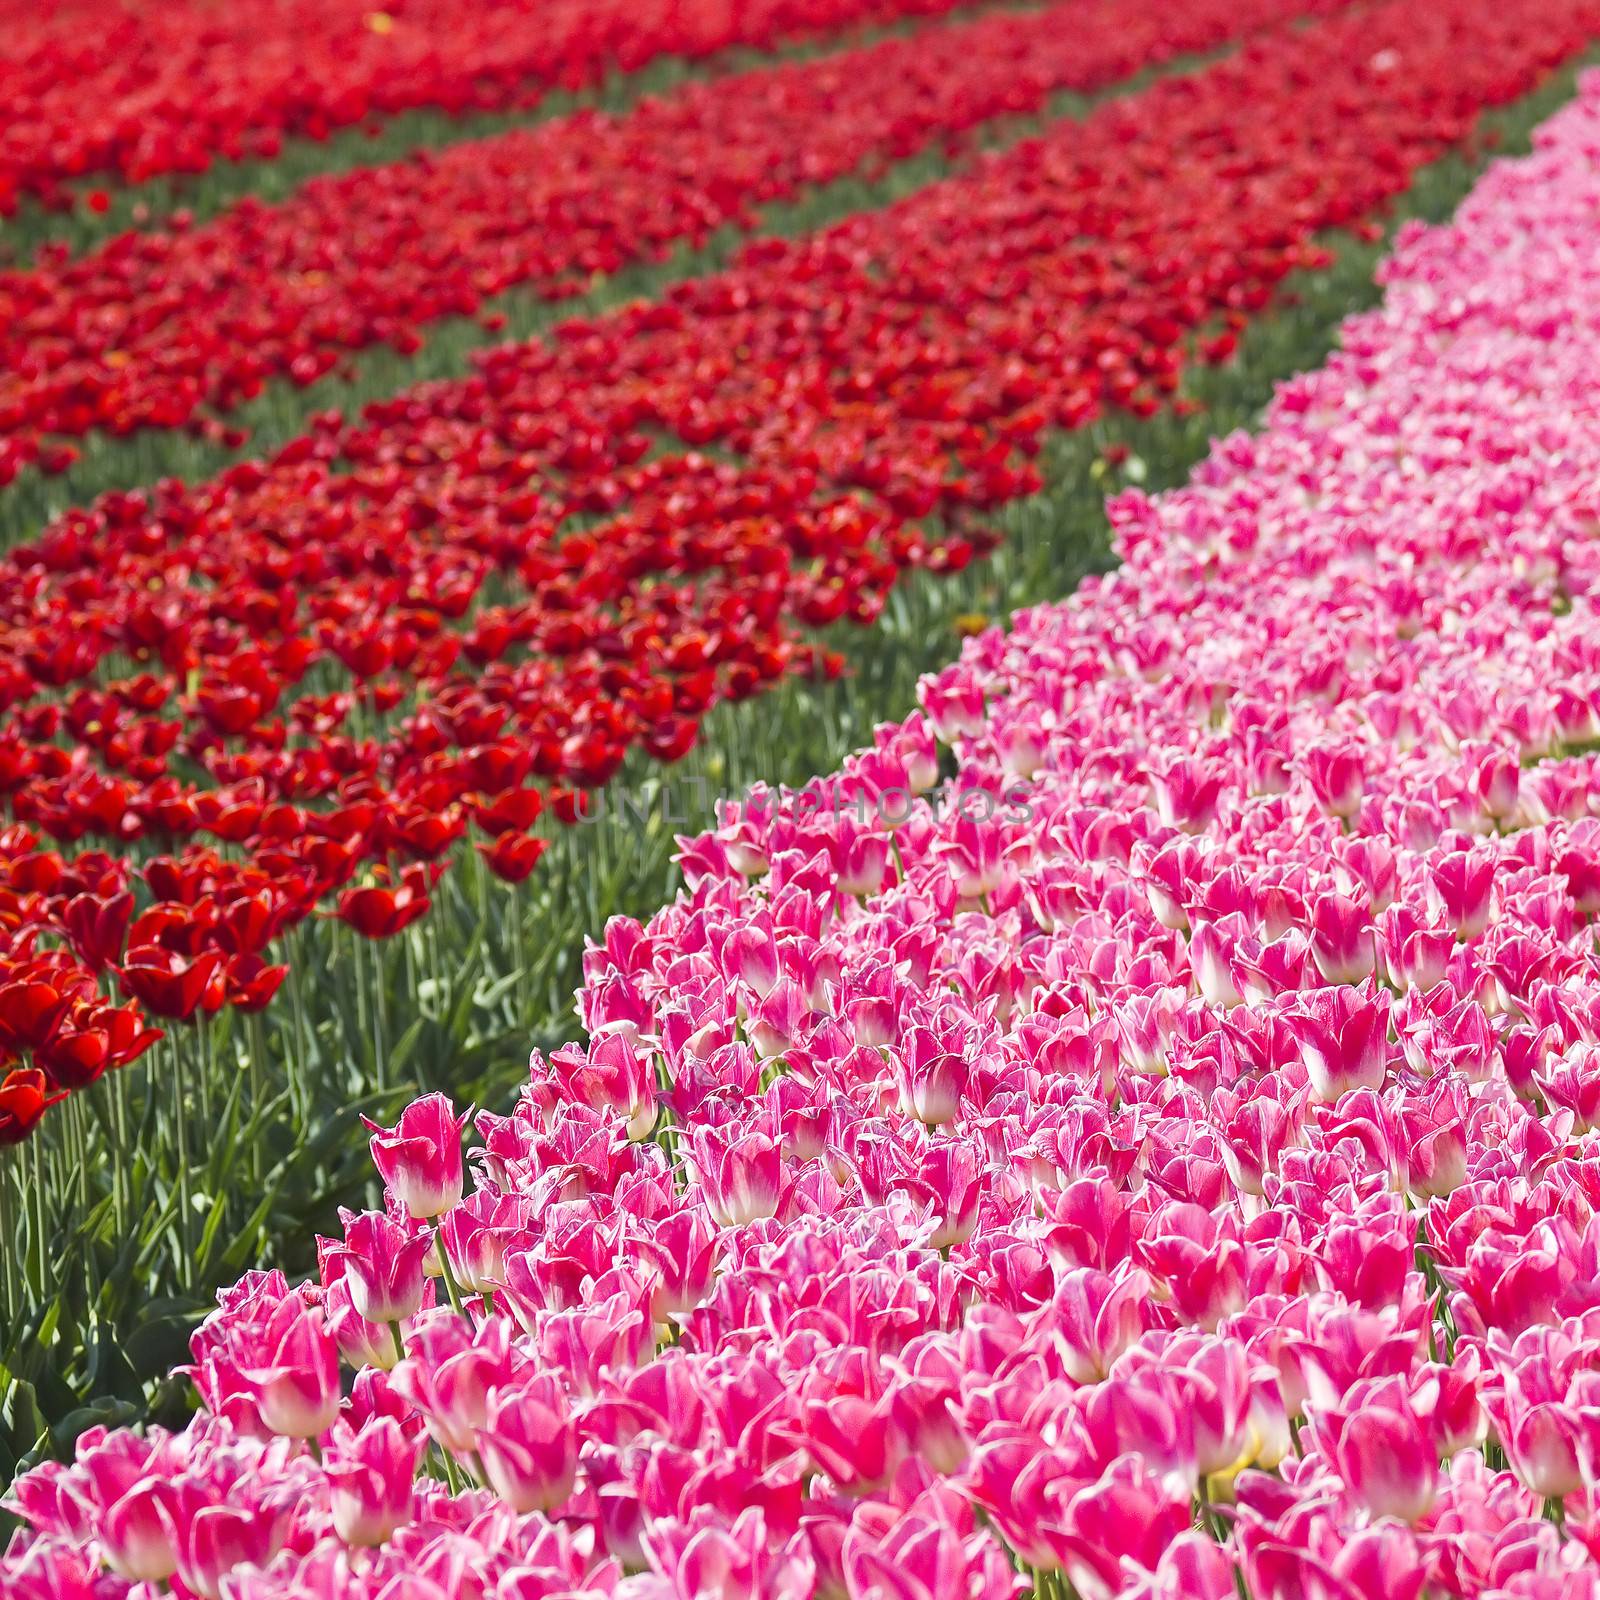 tulip field in the Netherlands by miradrozdowski